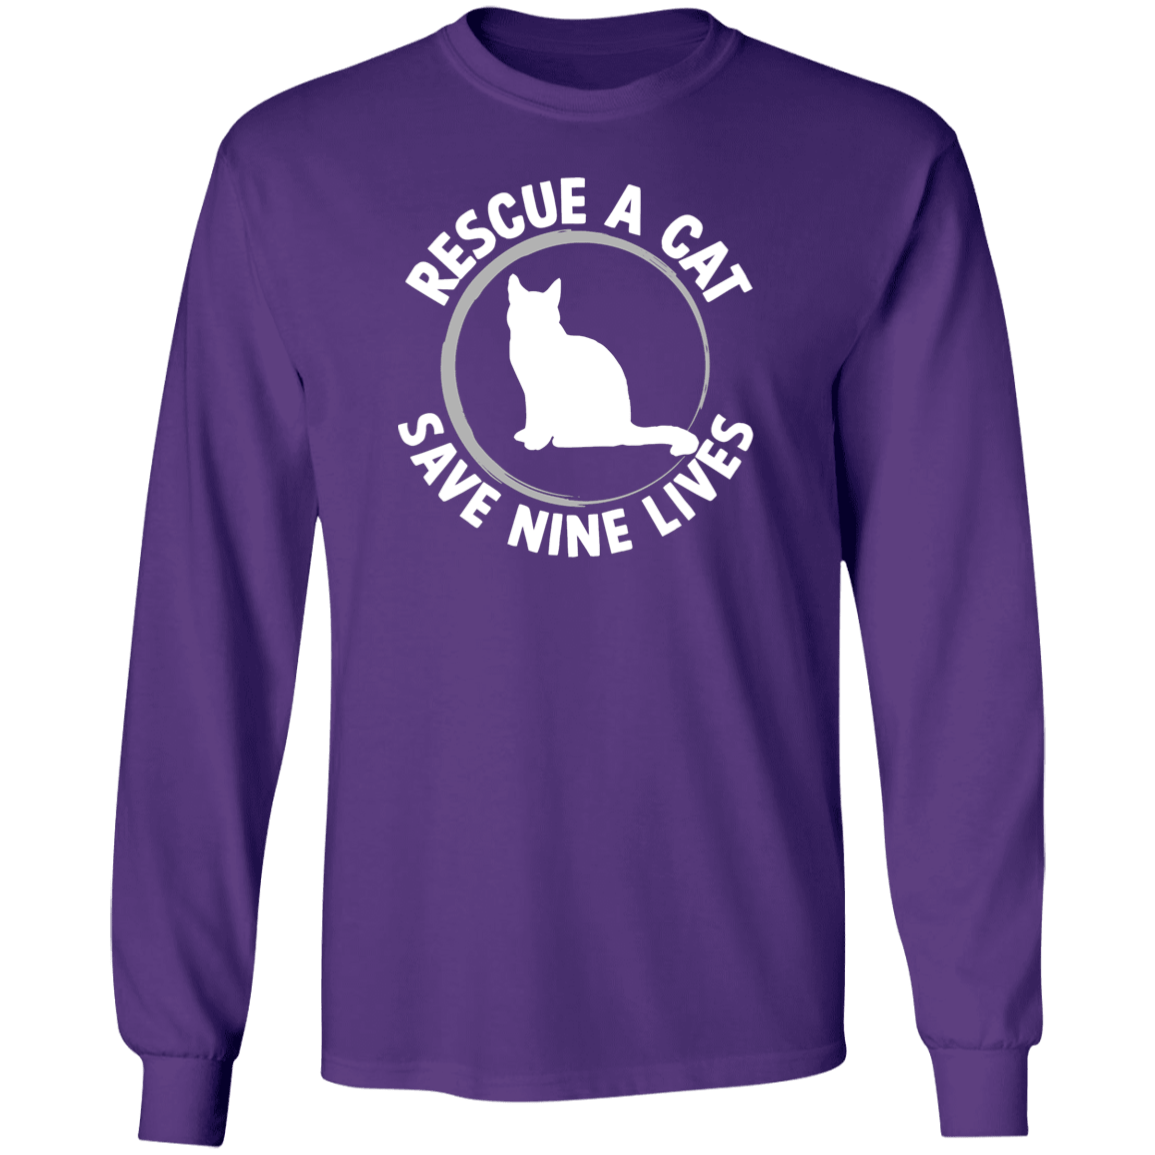 Save Nine Lives - Long Sleeve T Shirt.